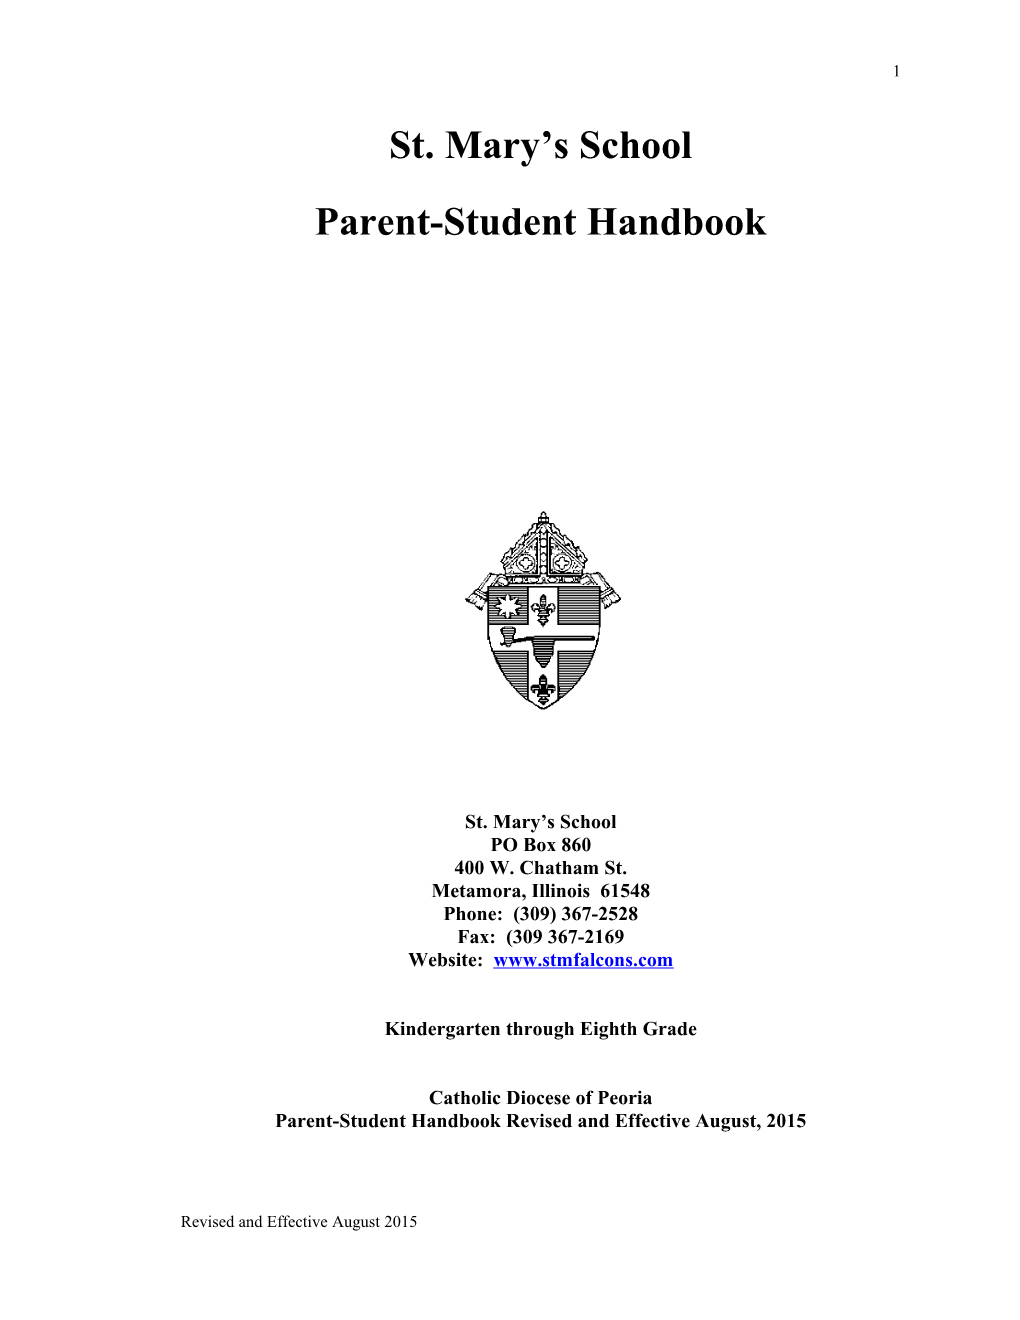 Parent-Student Handbook s1